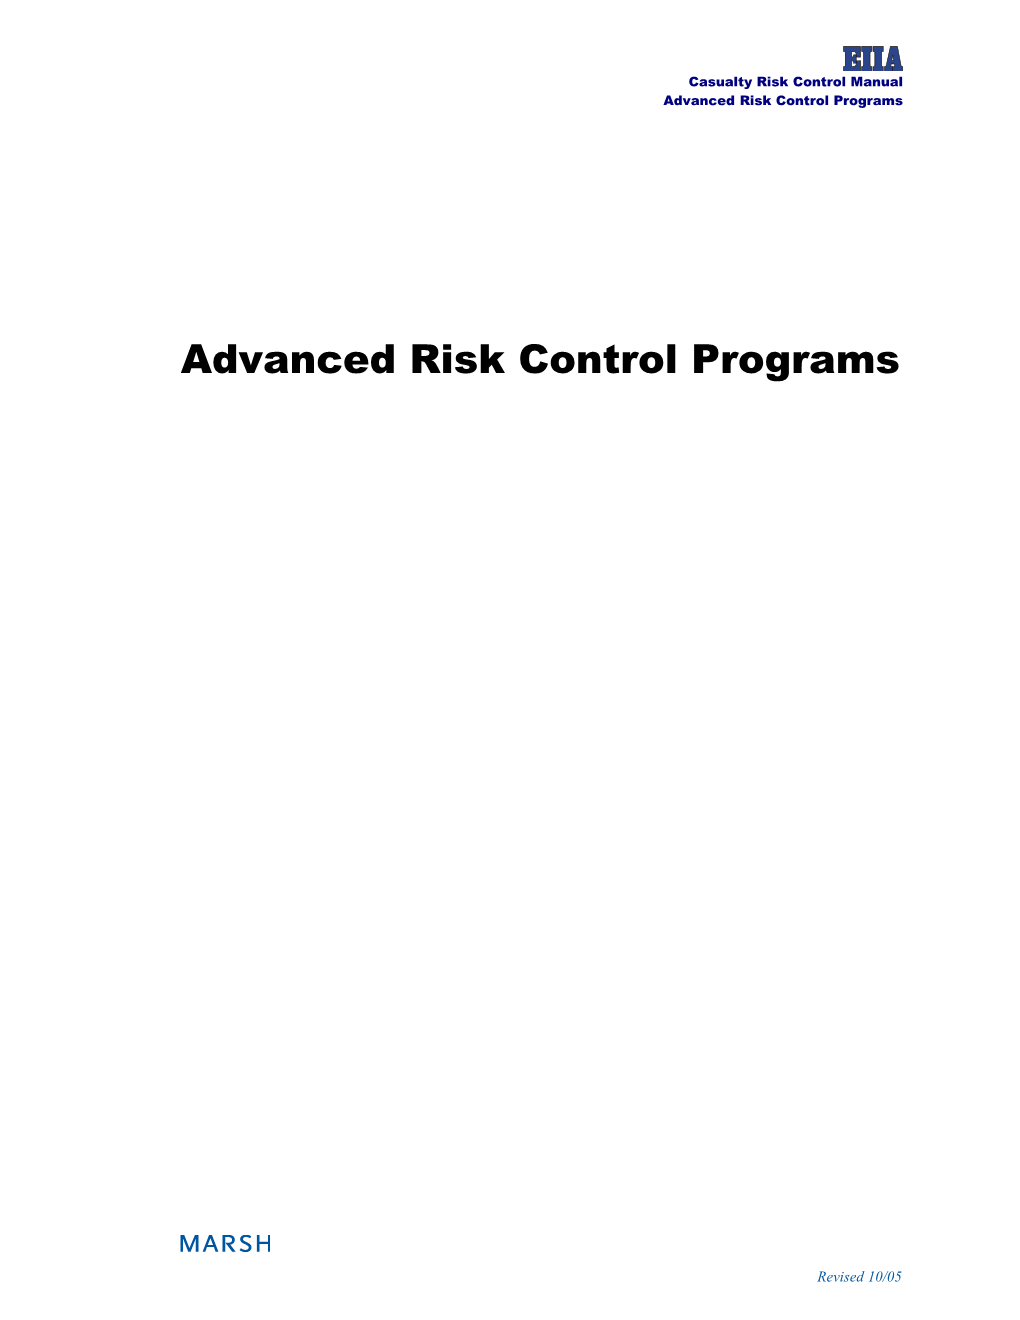 Advanced Risk Control Programs